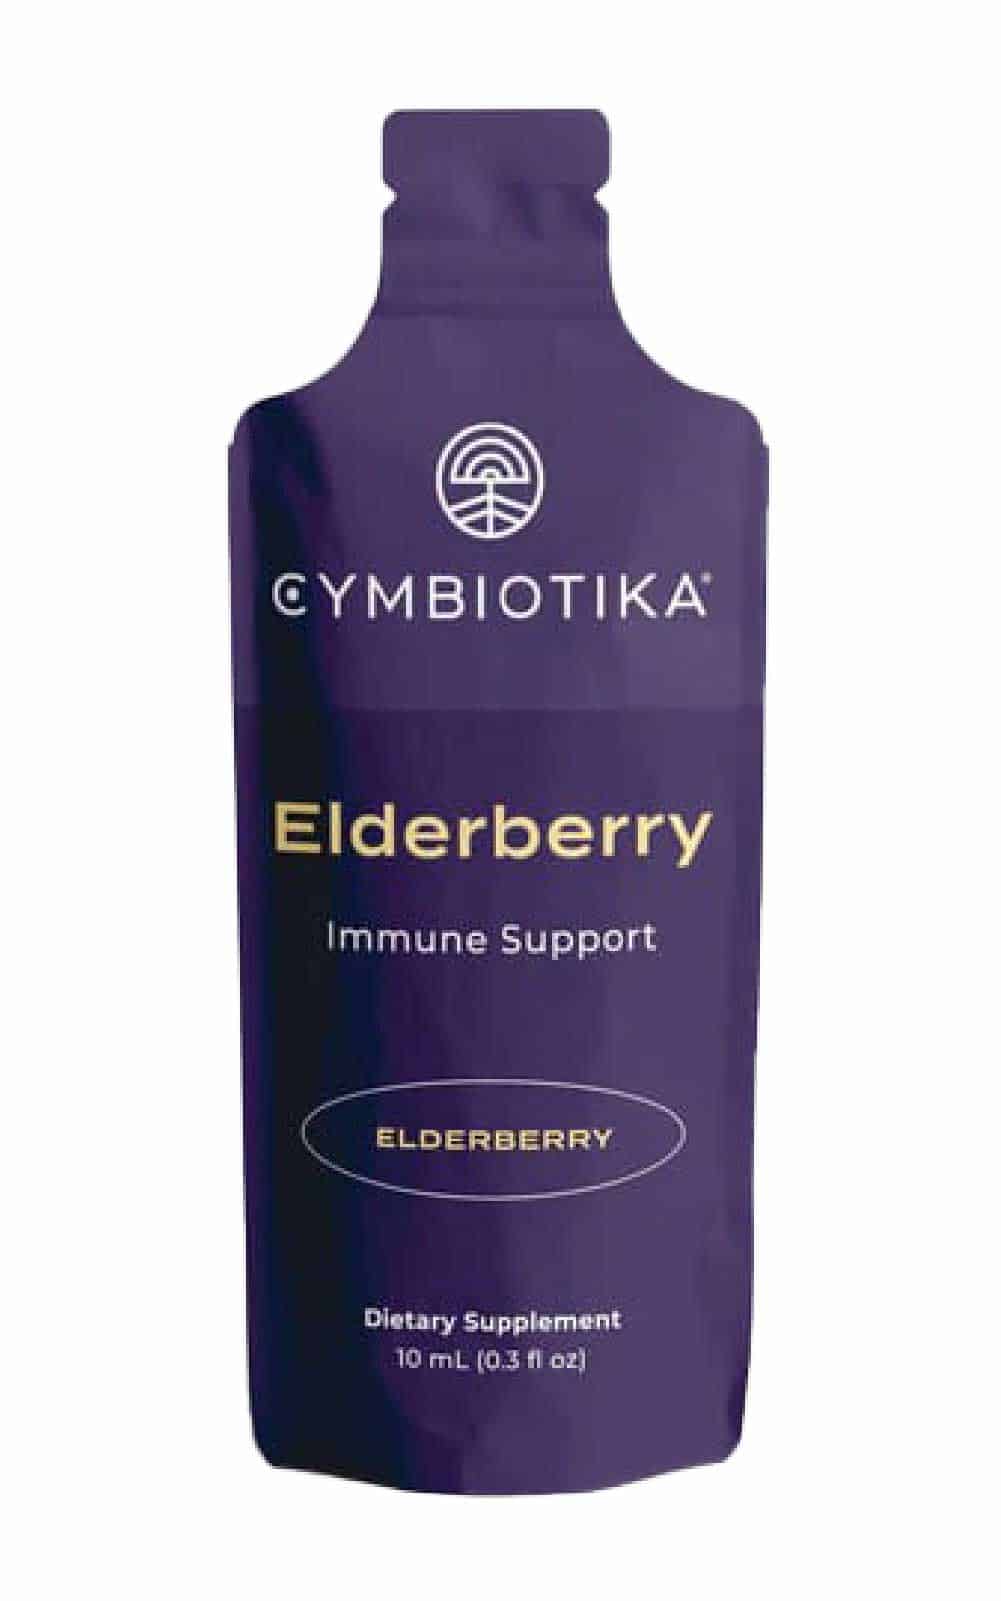 Buy Cymbiotika Liposomal Elderberry at LiveHelfi